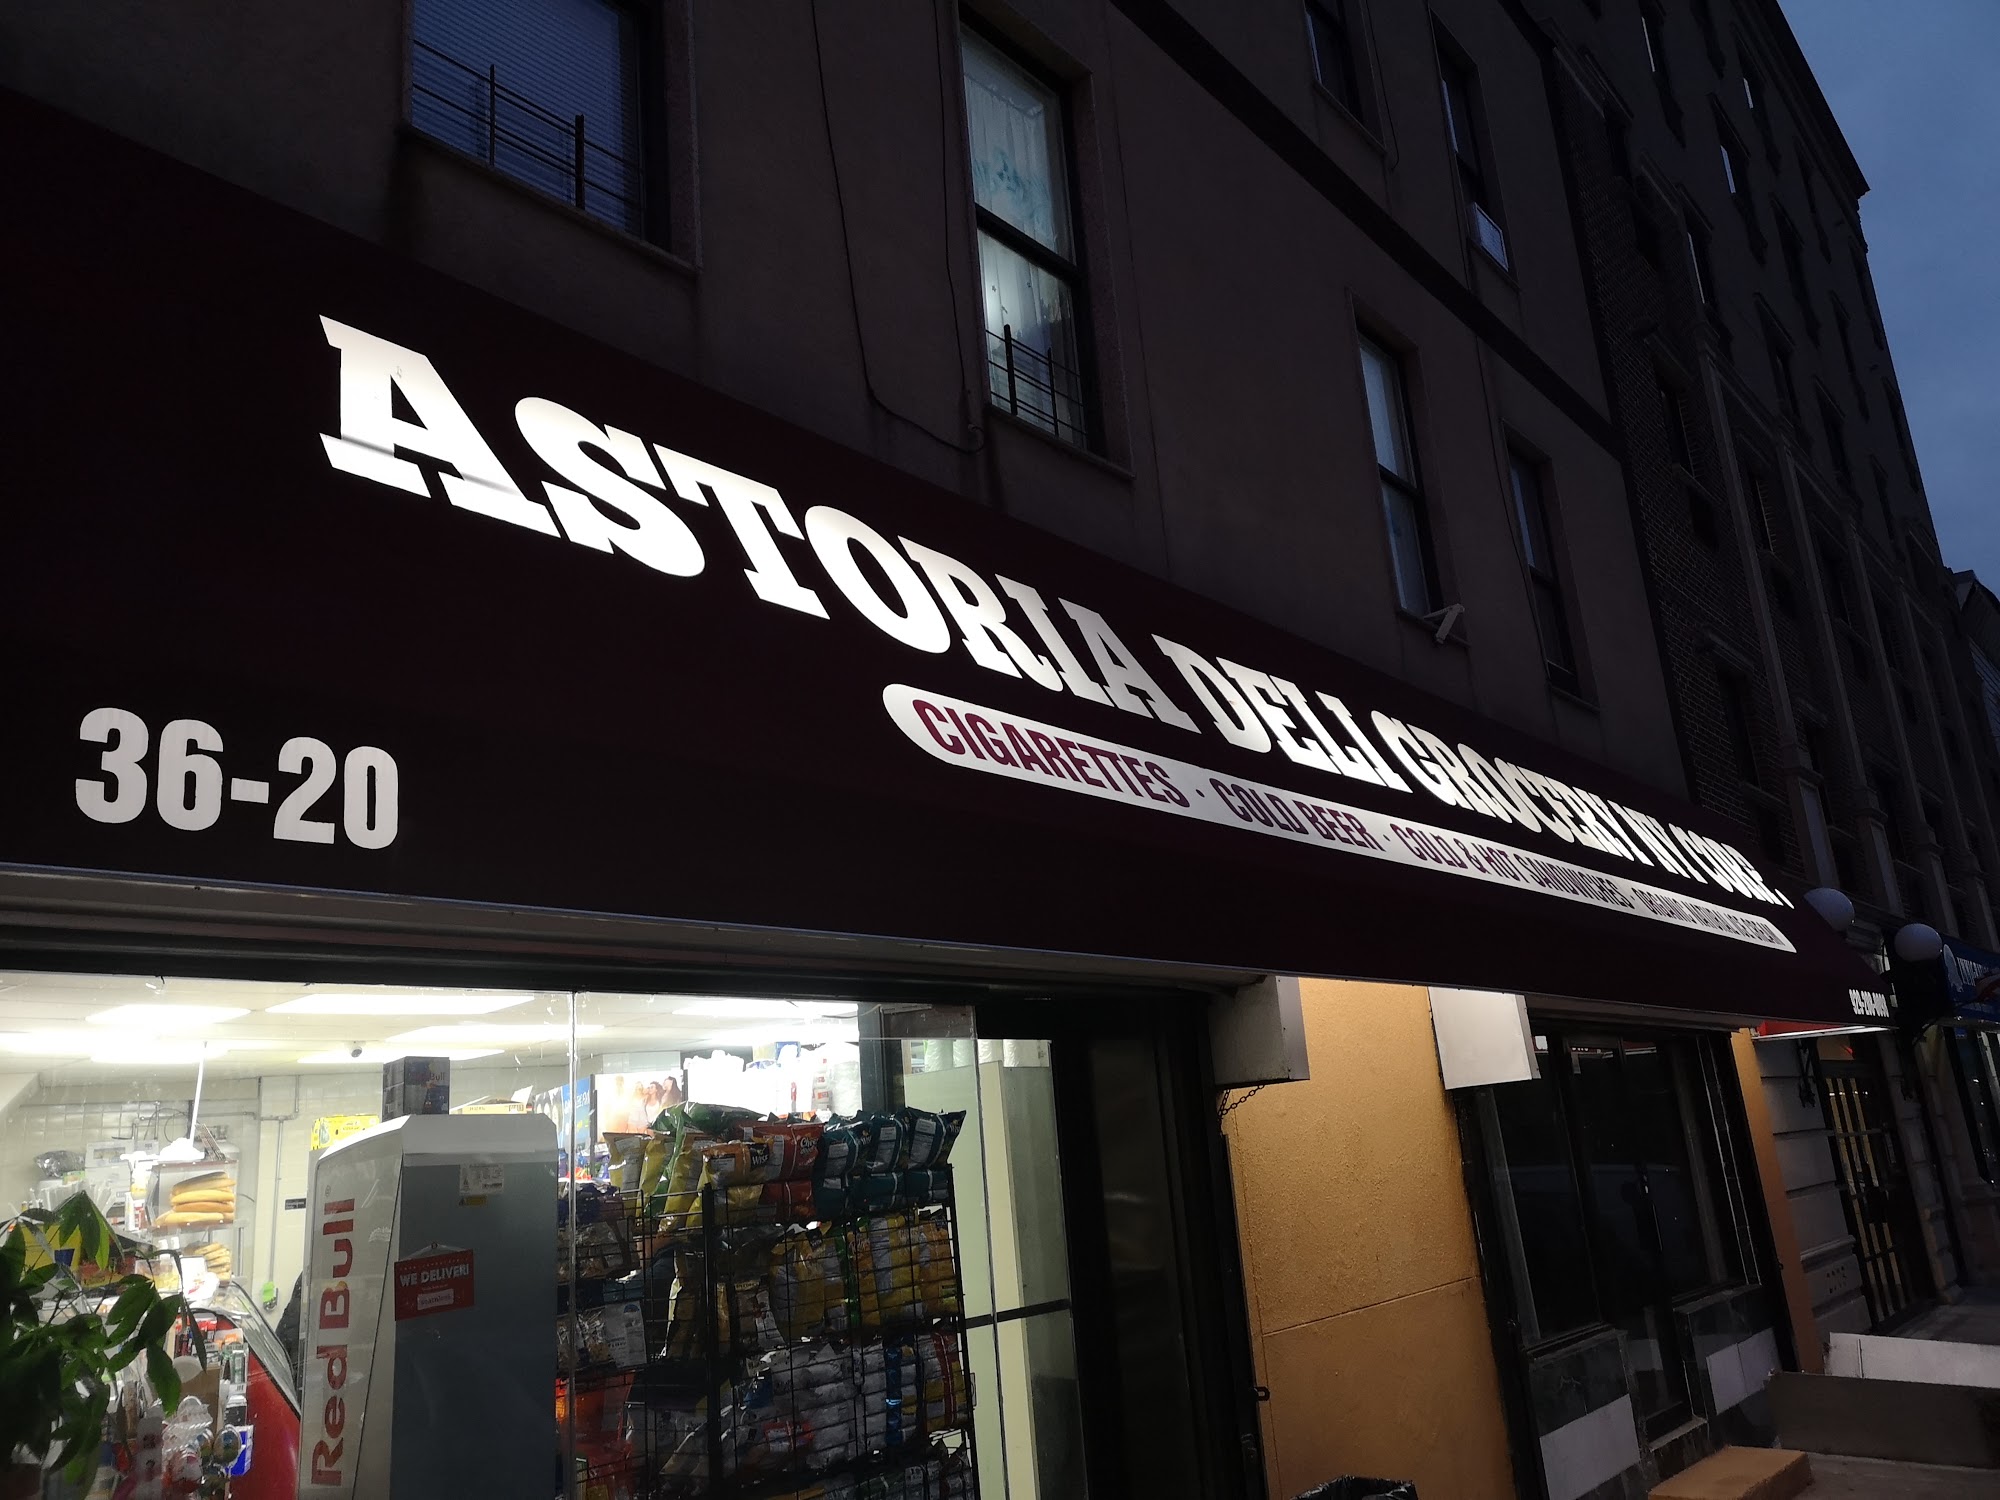 Astoria Deli Grocery NY, Corp